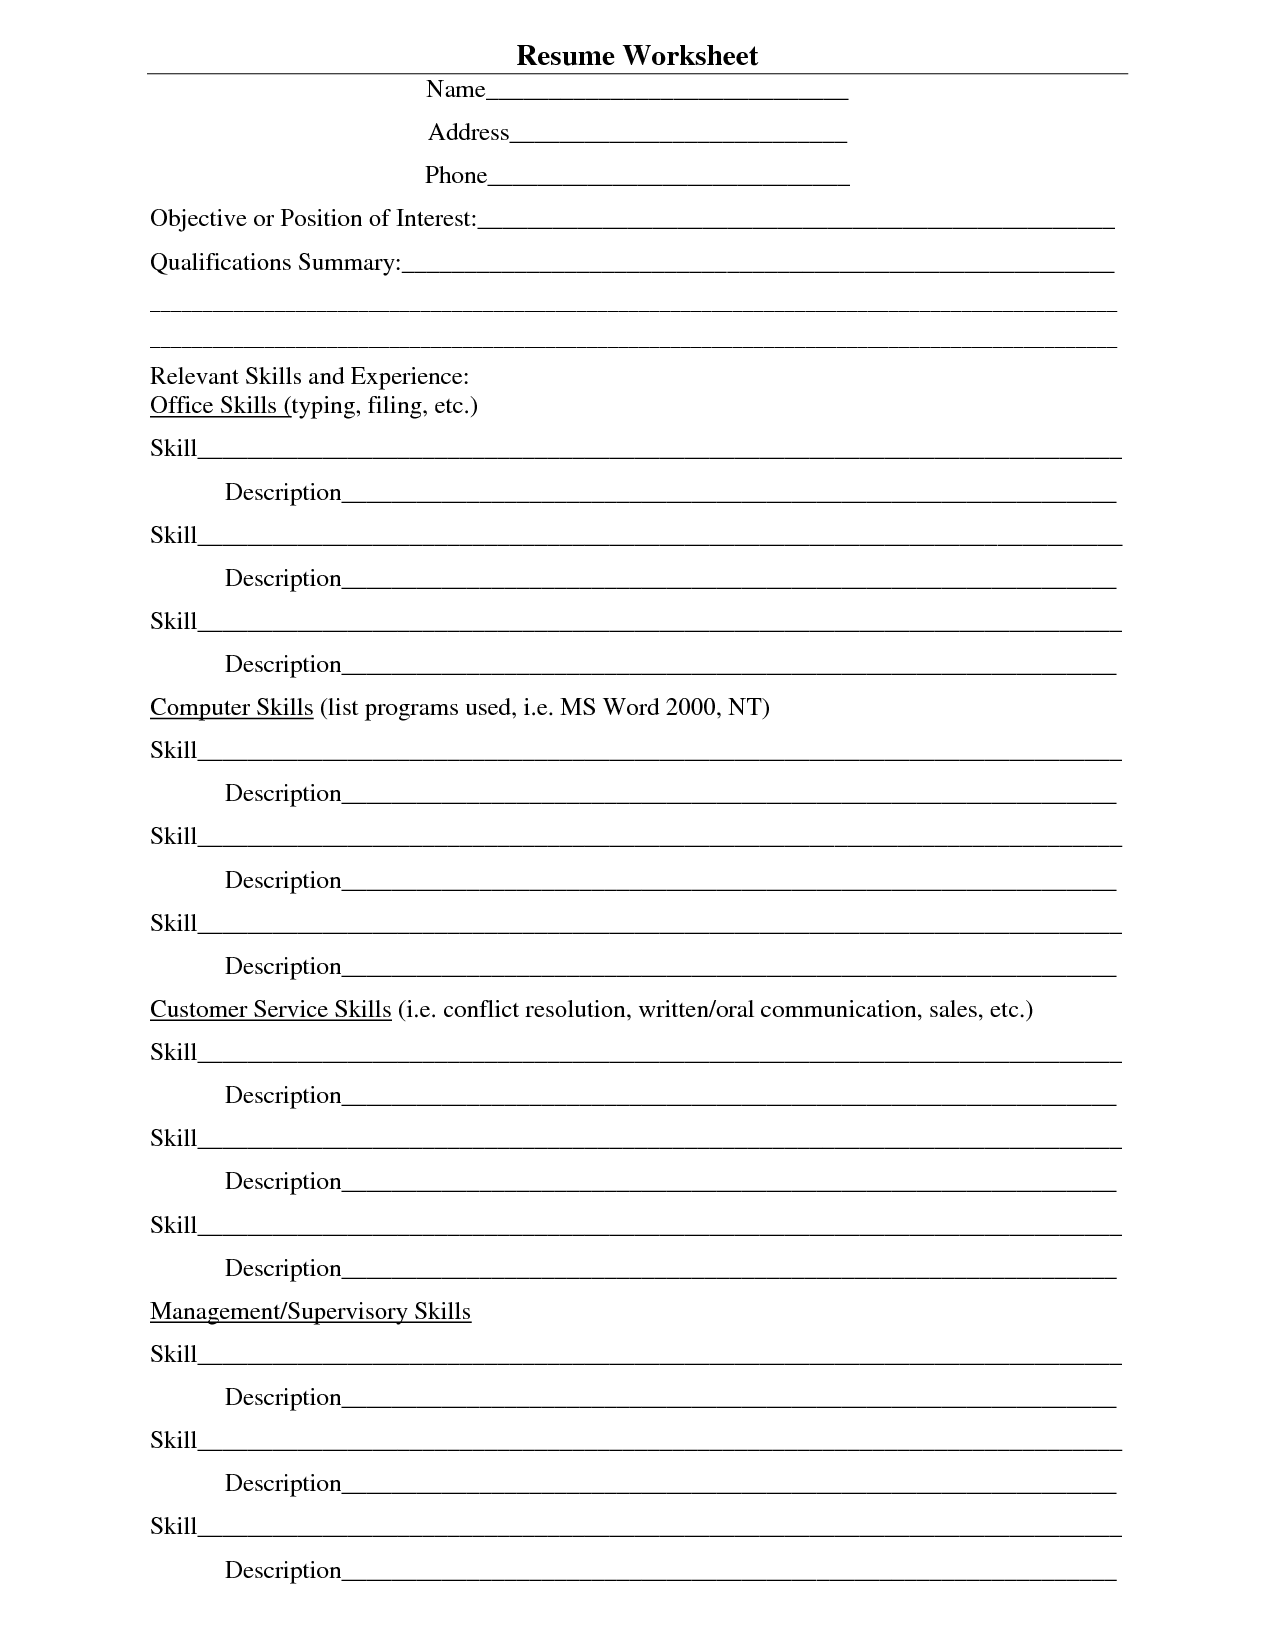 student resume worksheet